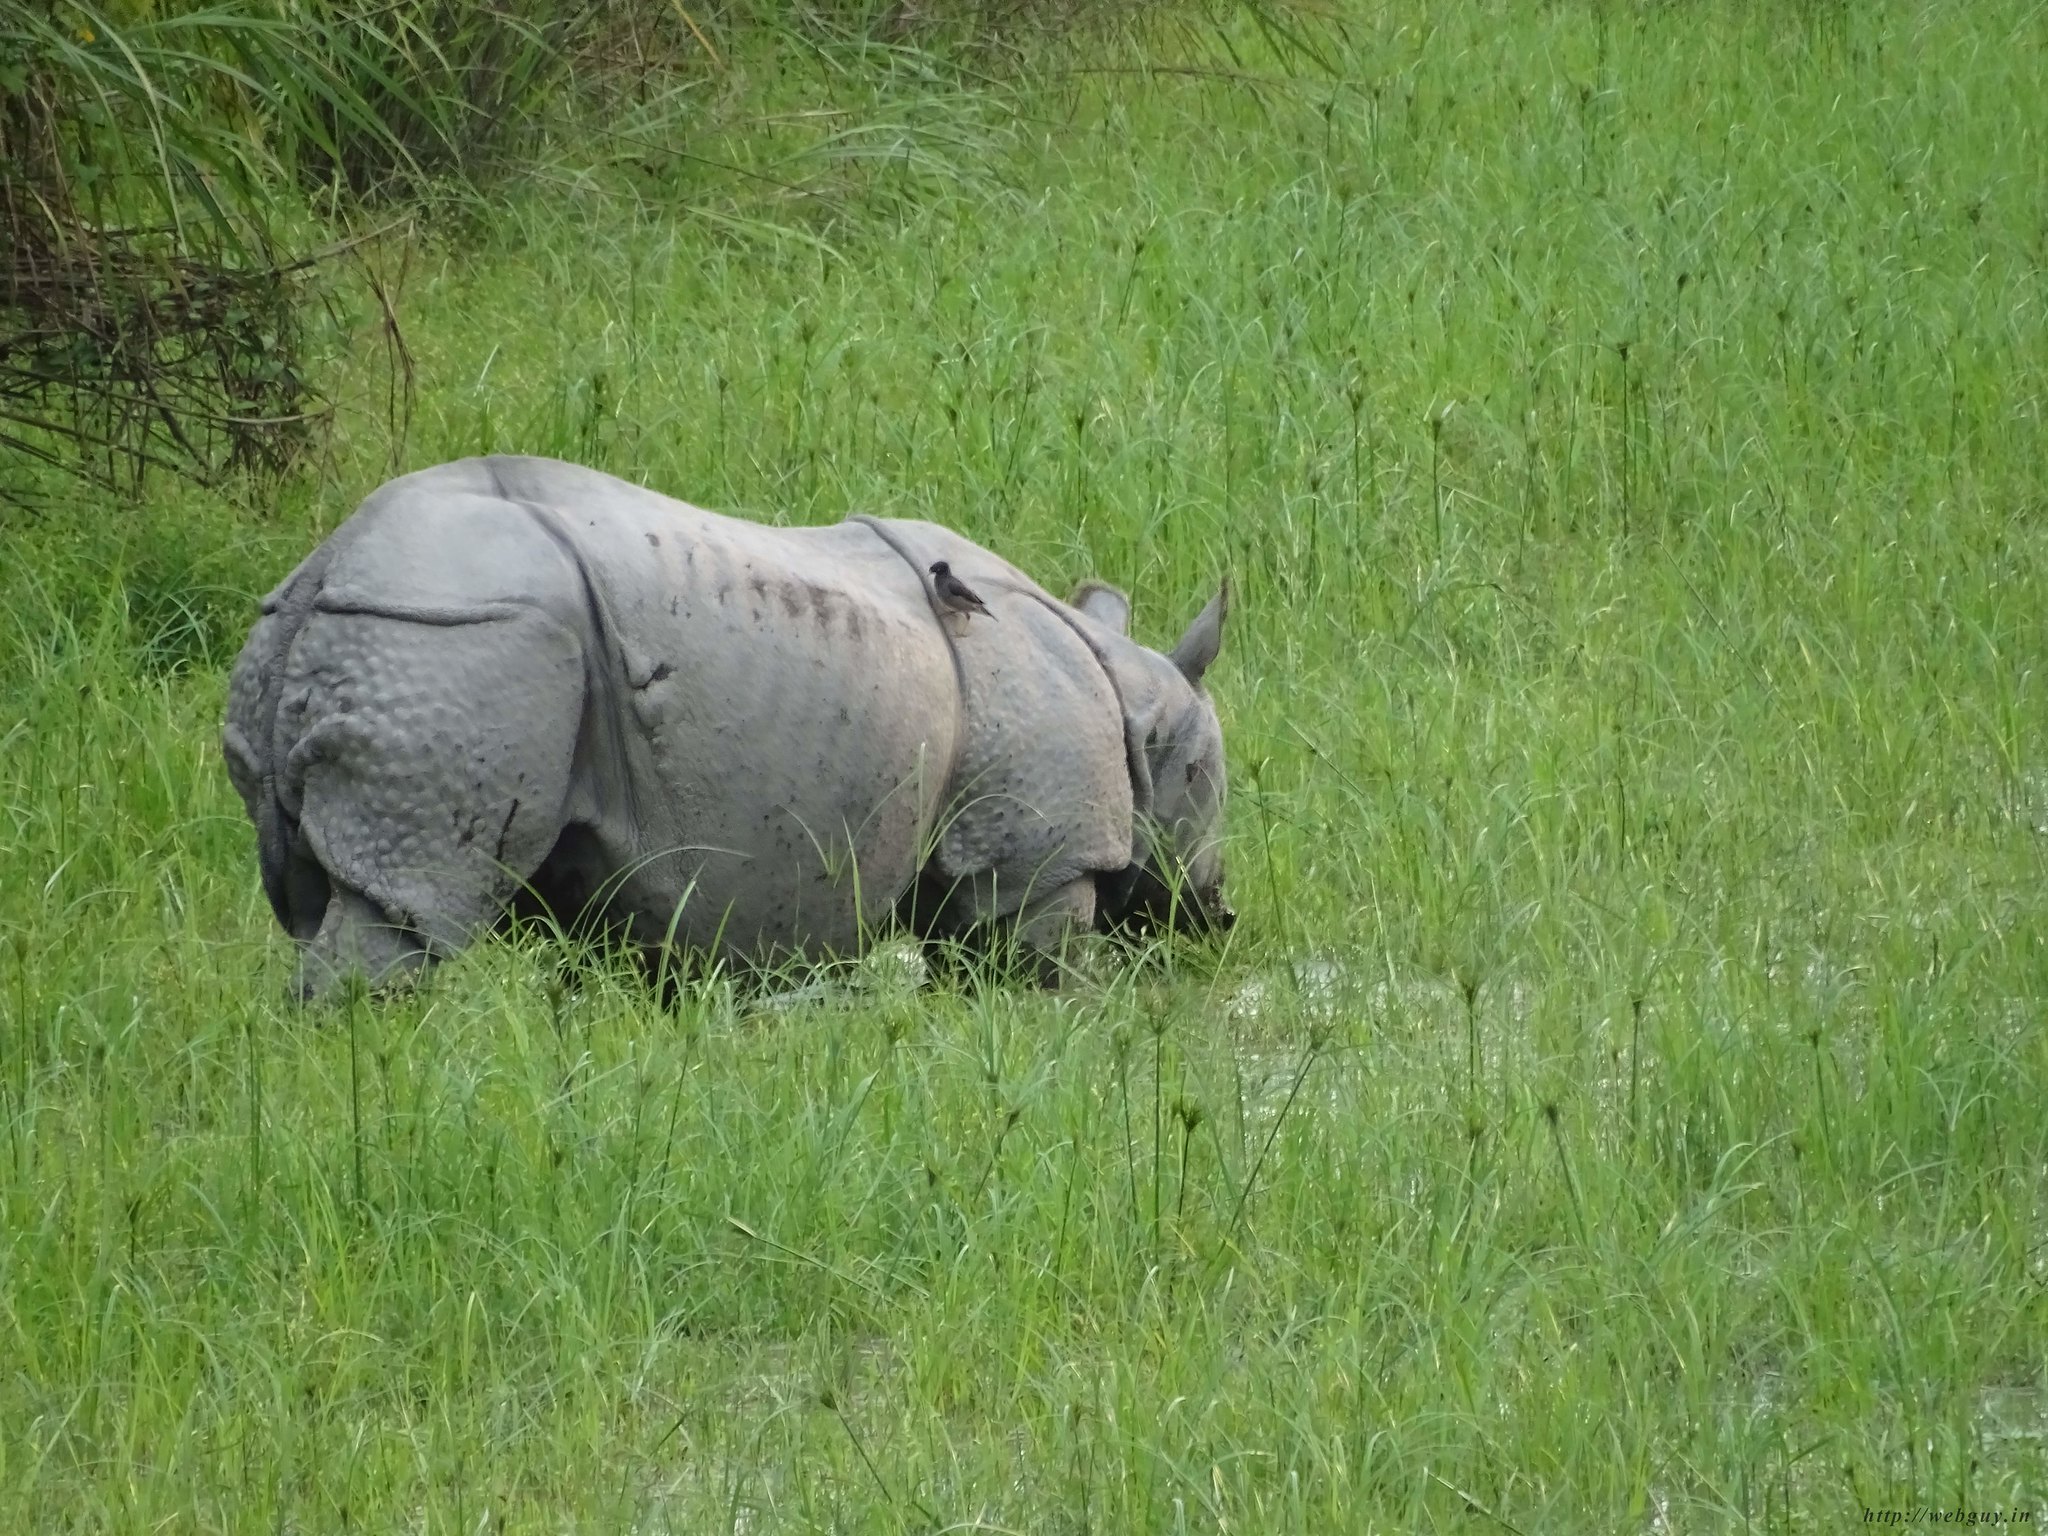 A Rhino Spotted In Kohora, Kaziranga